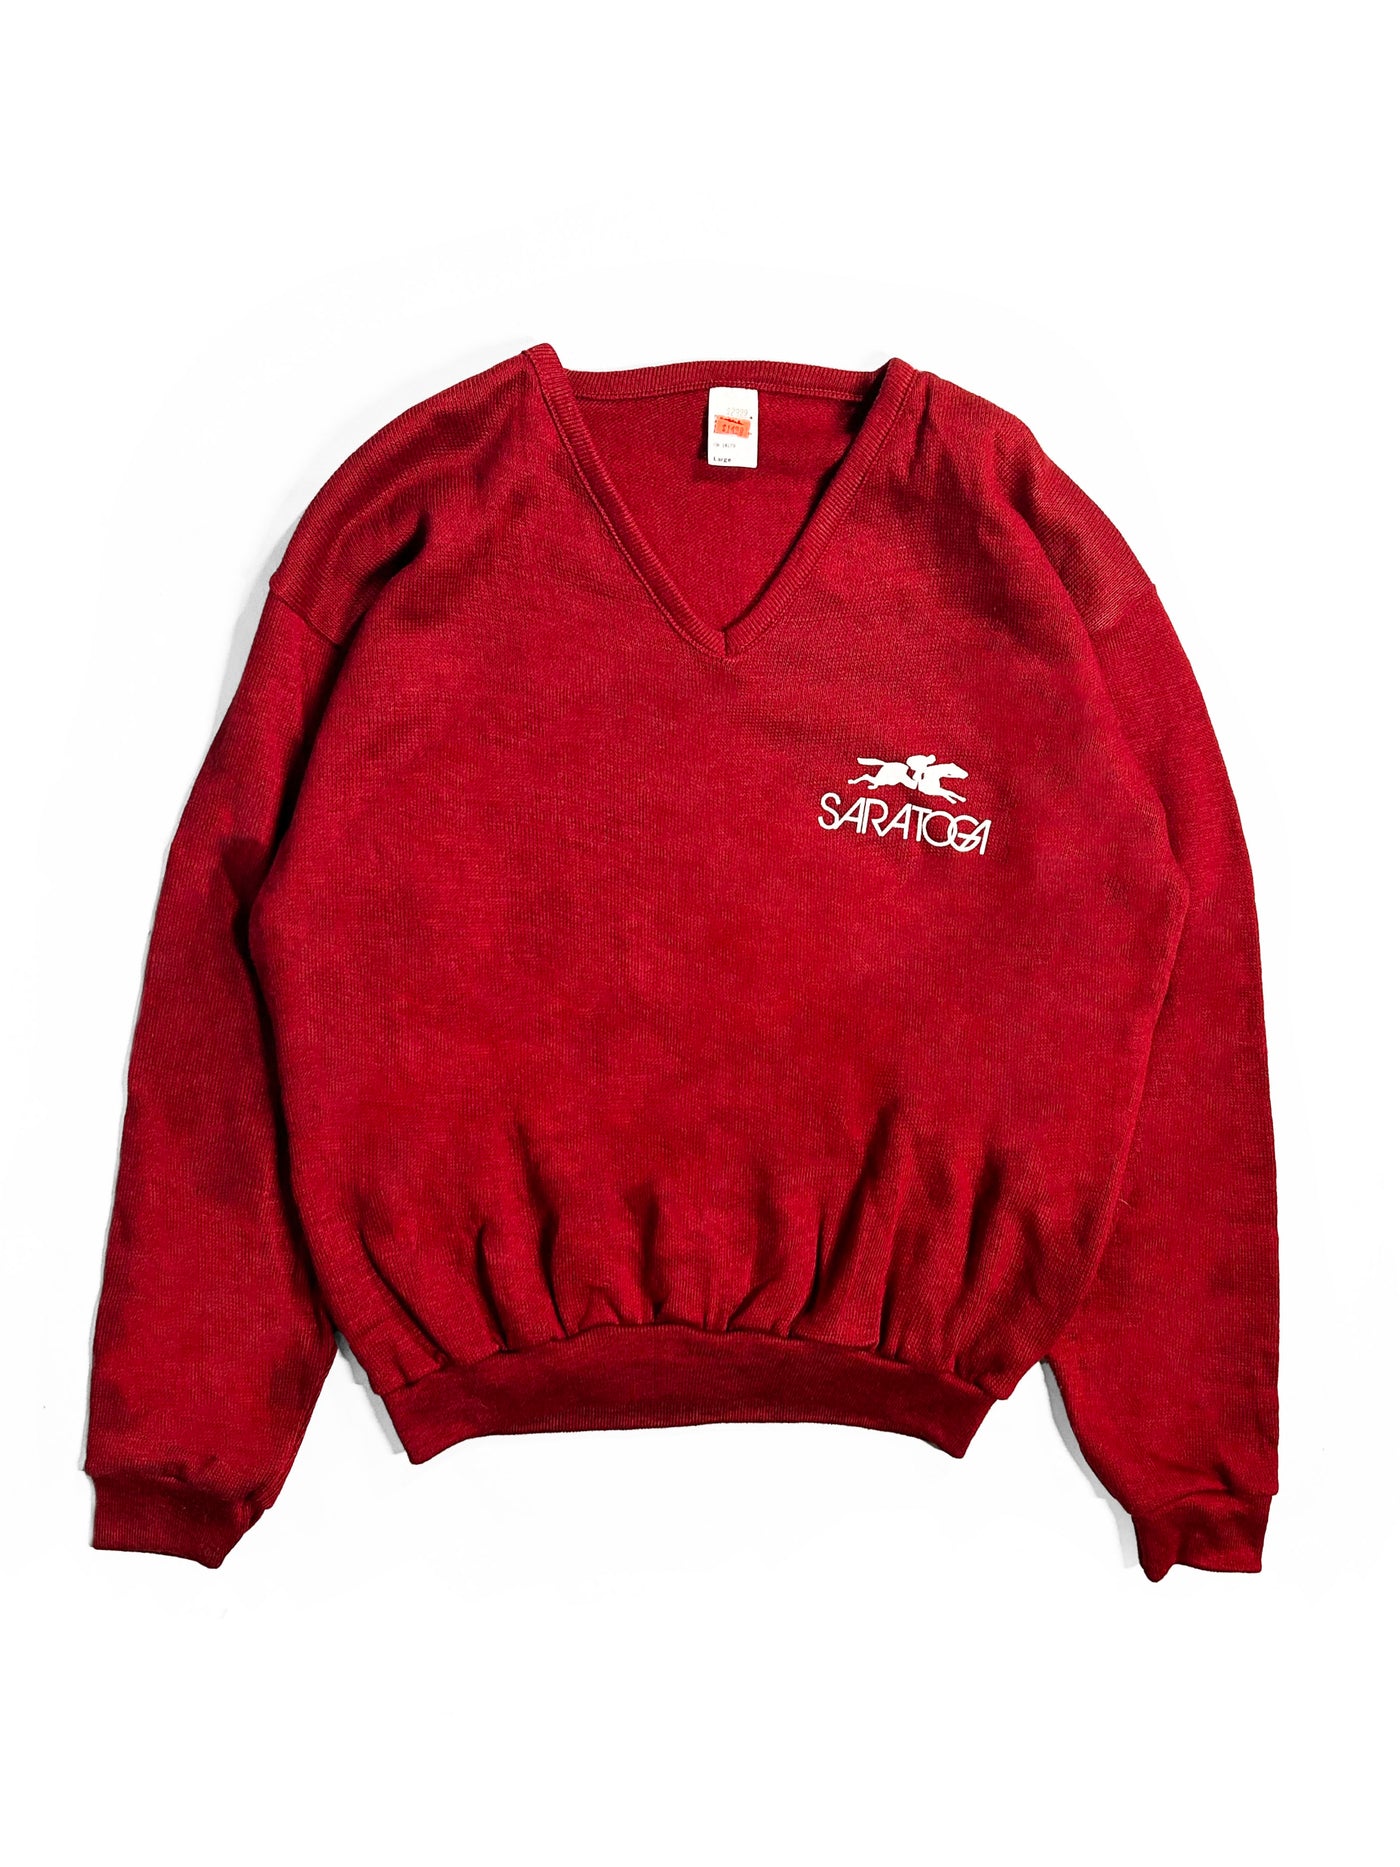 Vintage 80s Saratoga Spellout Sweater